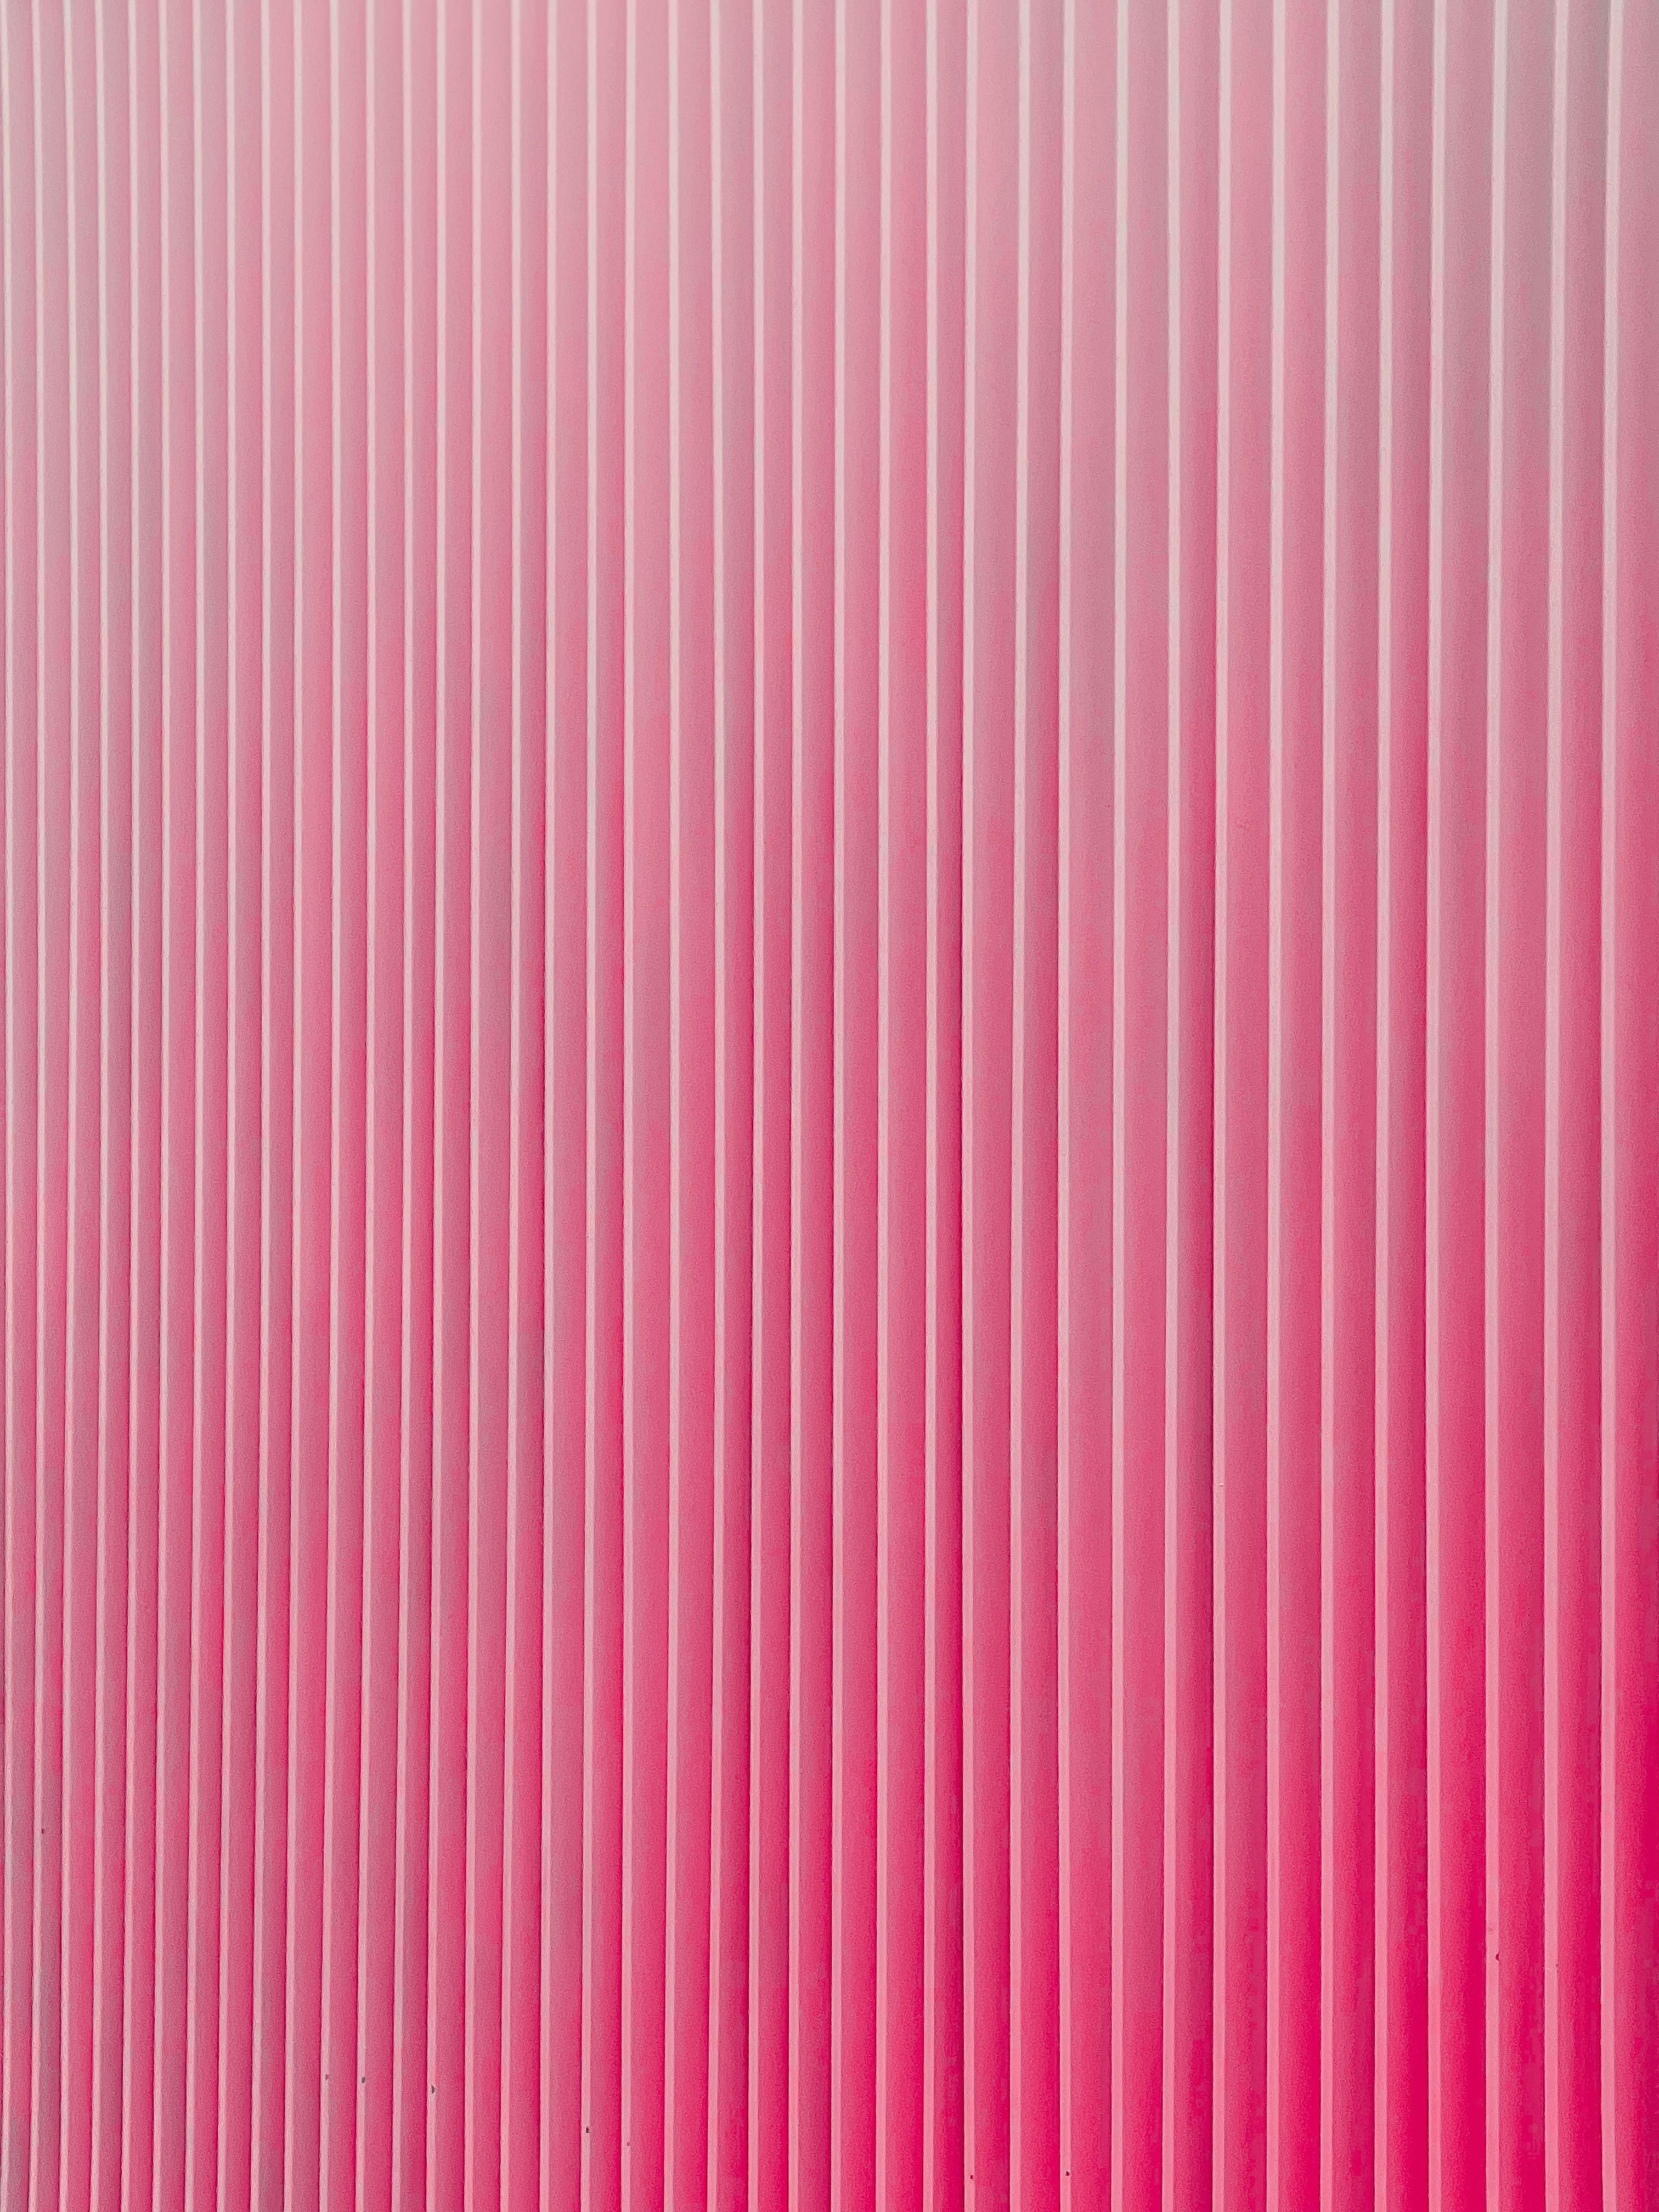 A Pink Wallpaper · Free Stock Photo